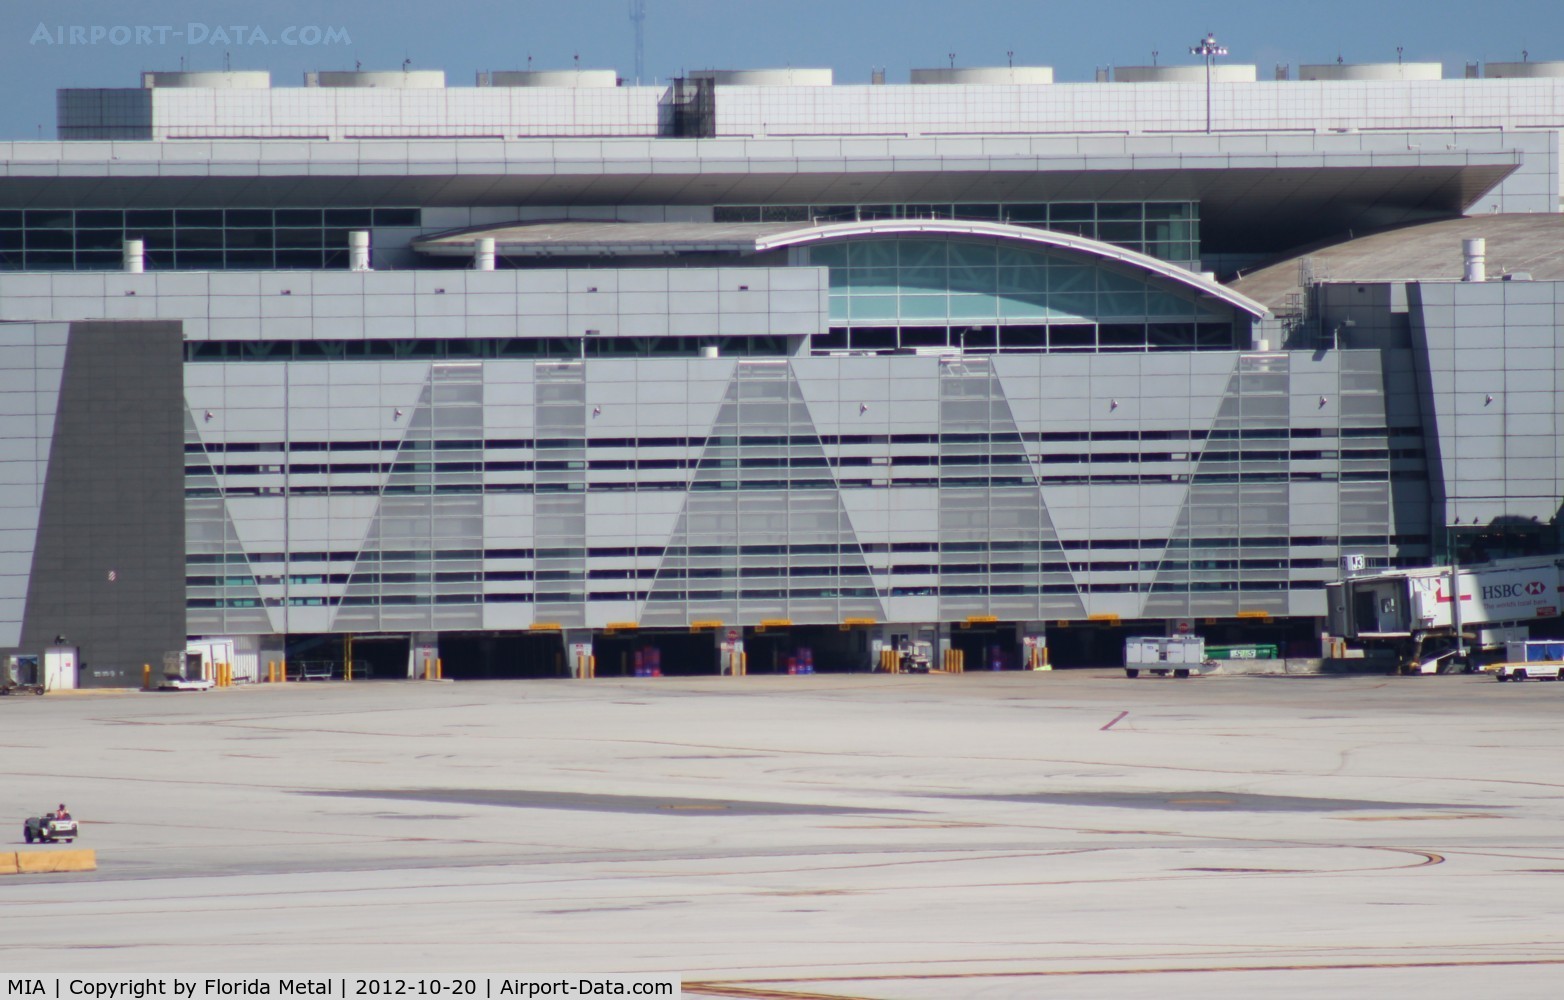 Miami International Airport (MIA) - It spells MIAMI on the glass